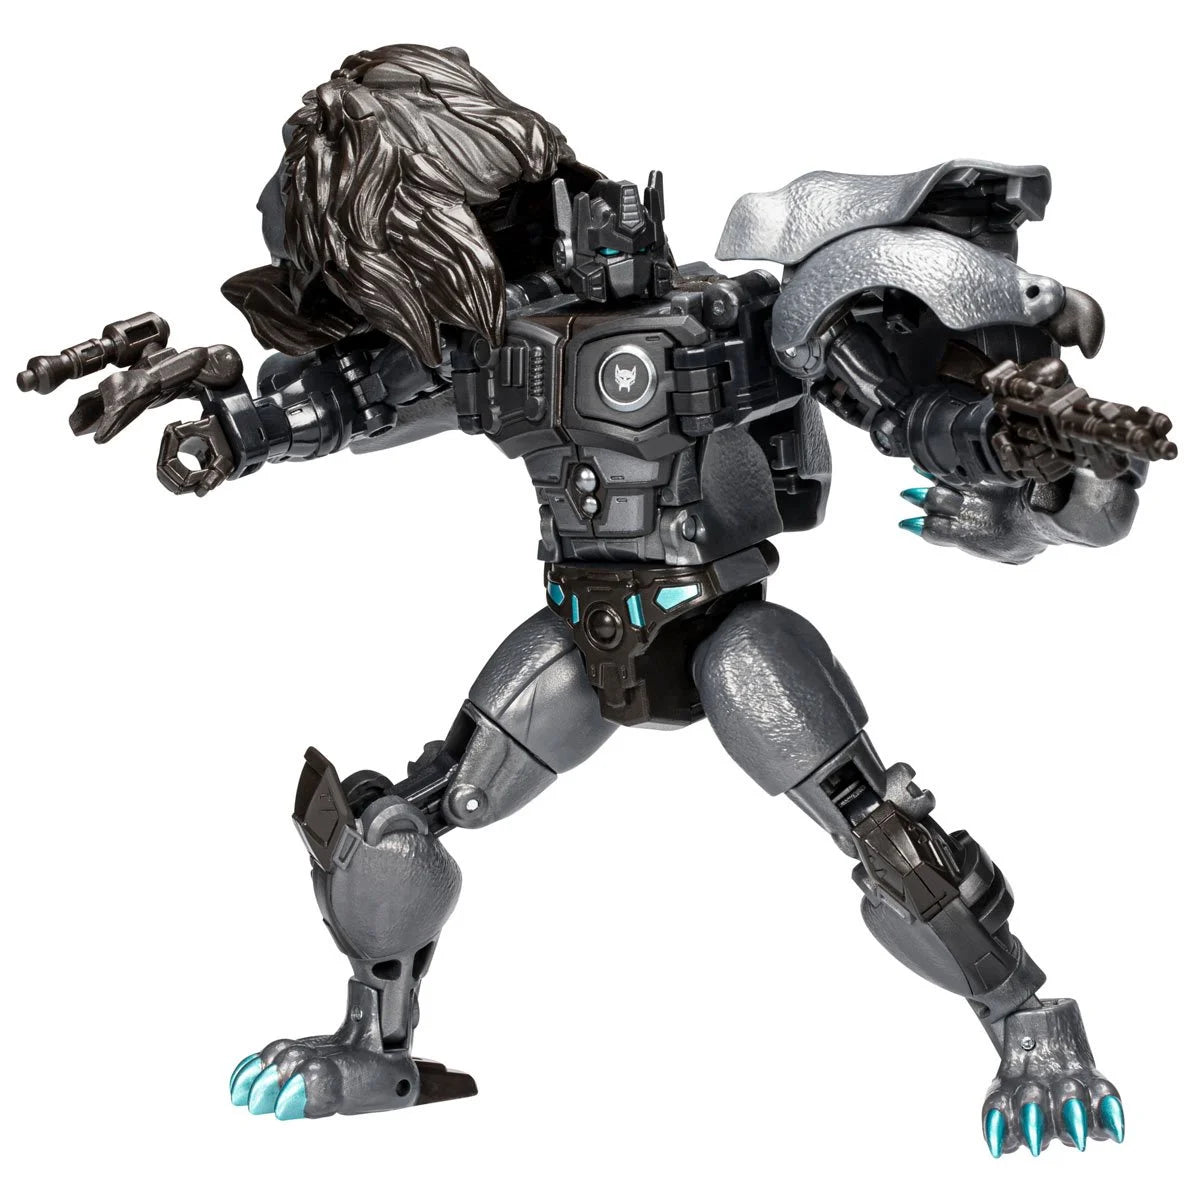 Transformers Generations Legacy Evolution Voyager Nemesis Leo Prime Action Figure Toy - Heretoserveyou